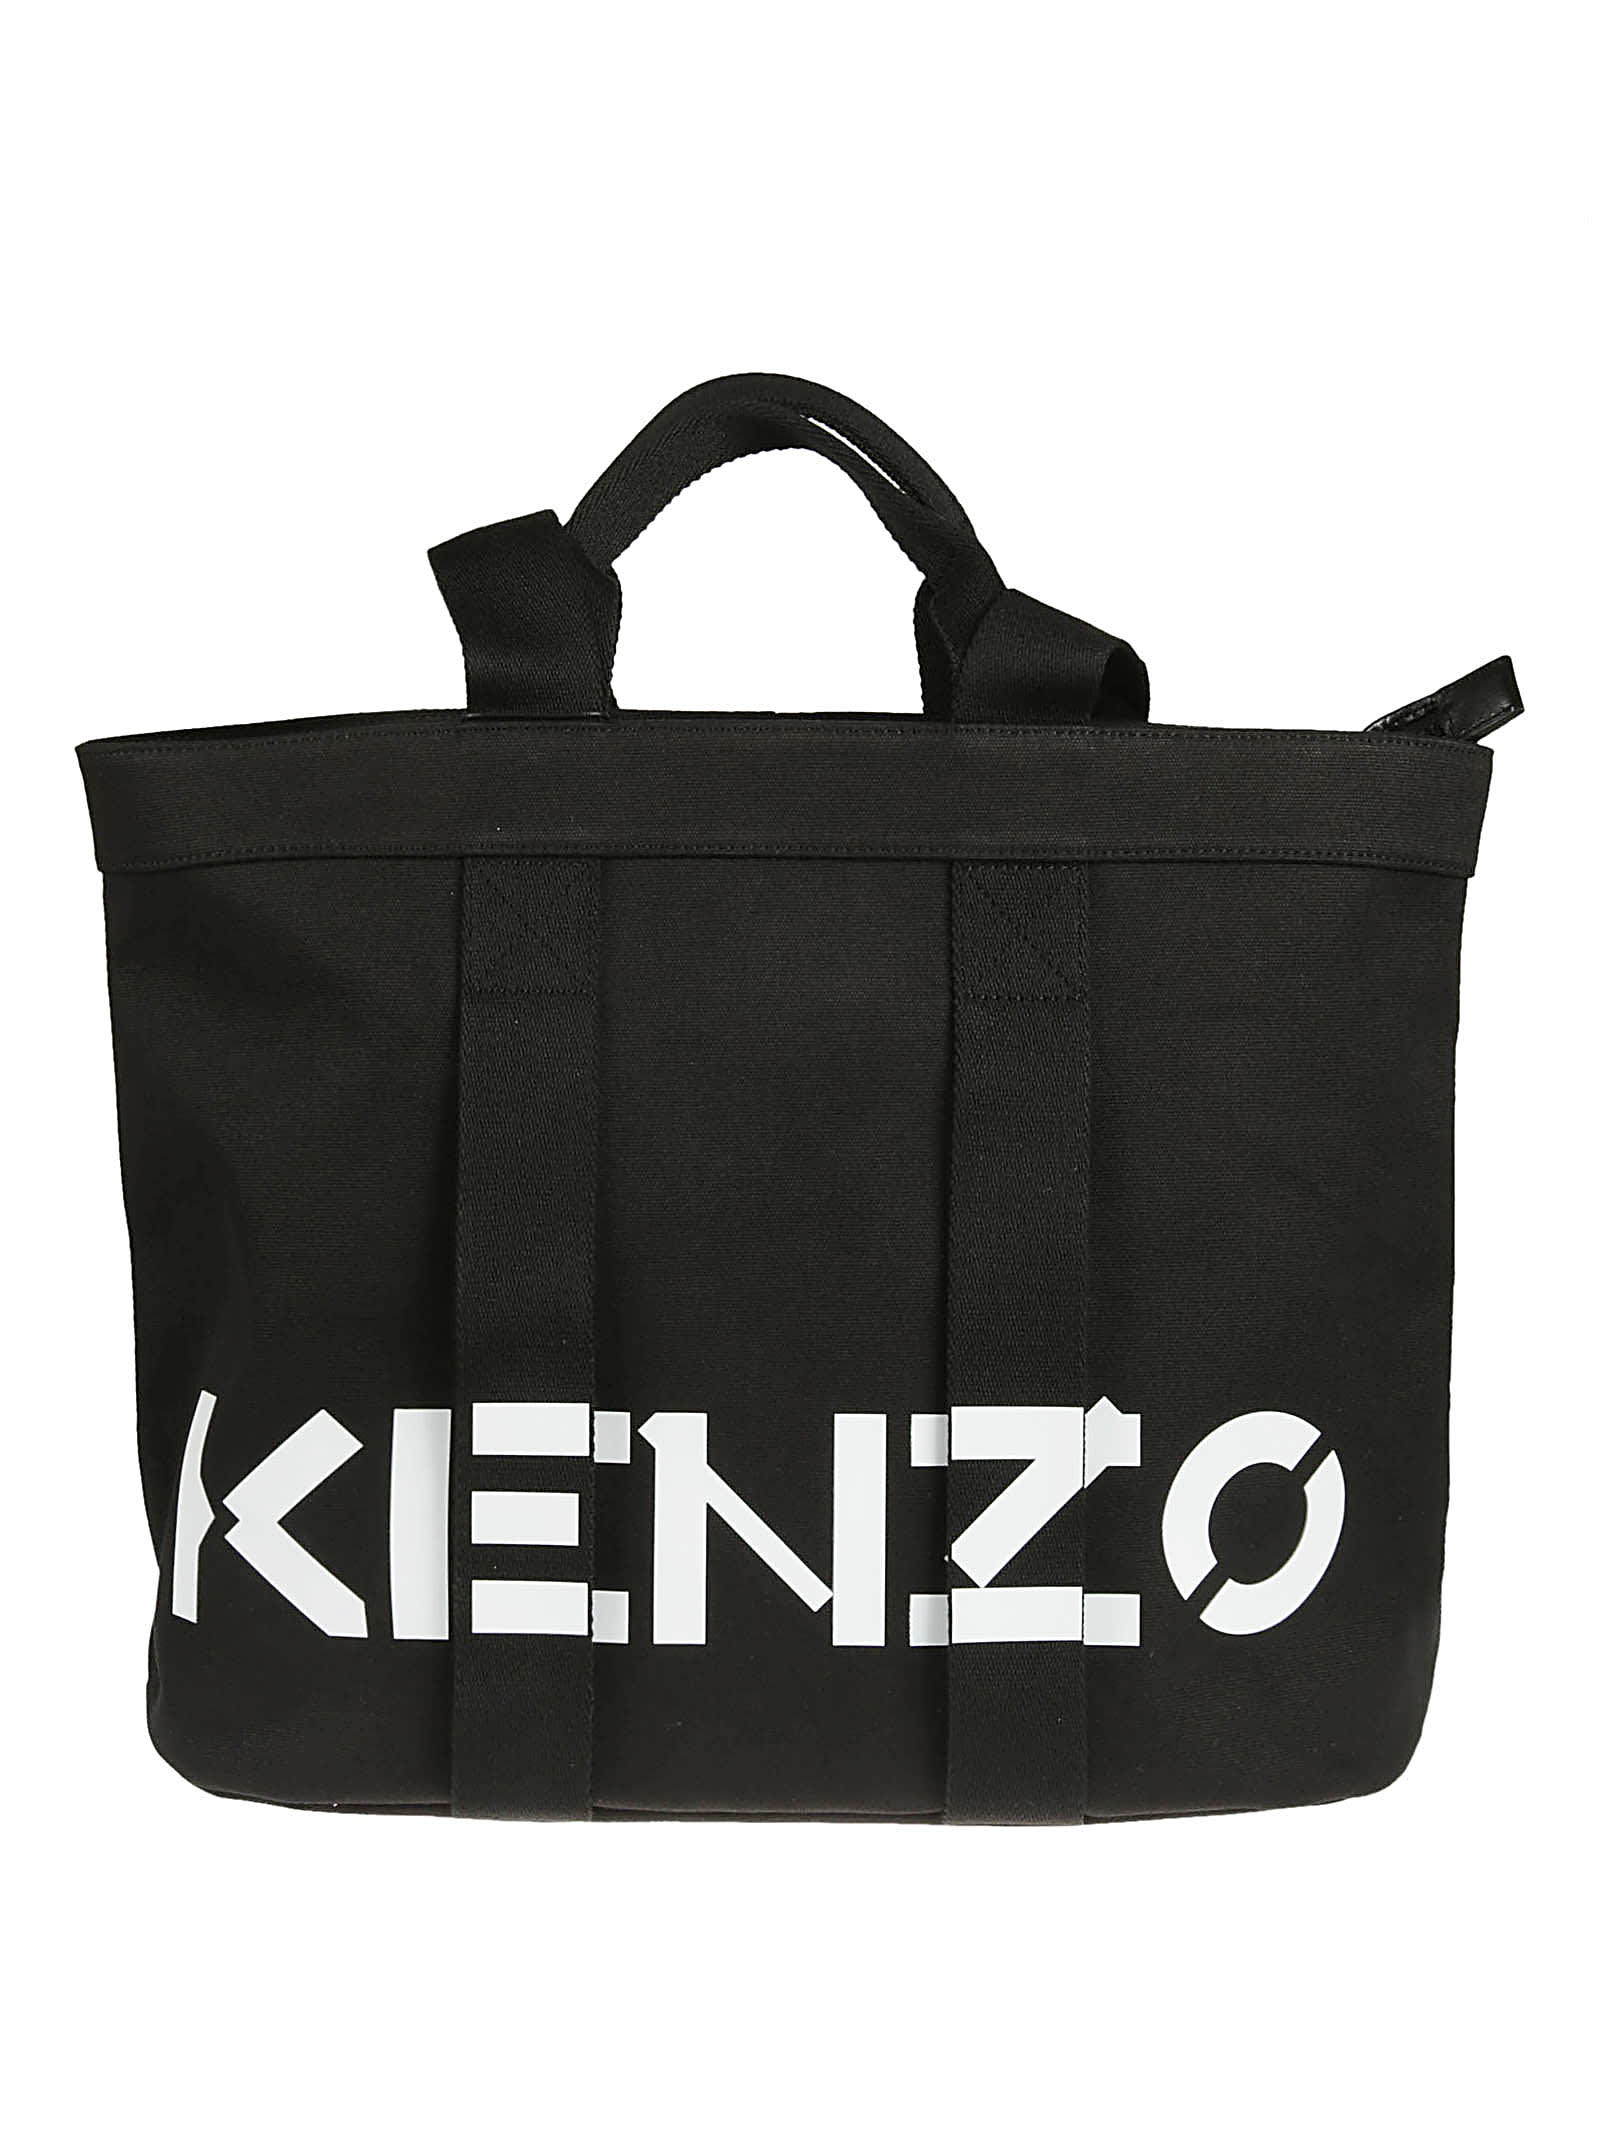 Kenzo Logo Print Large Tote